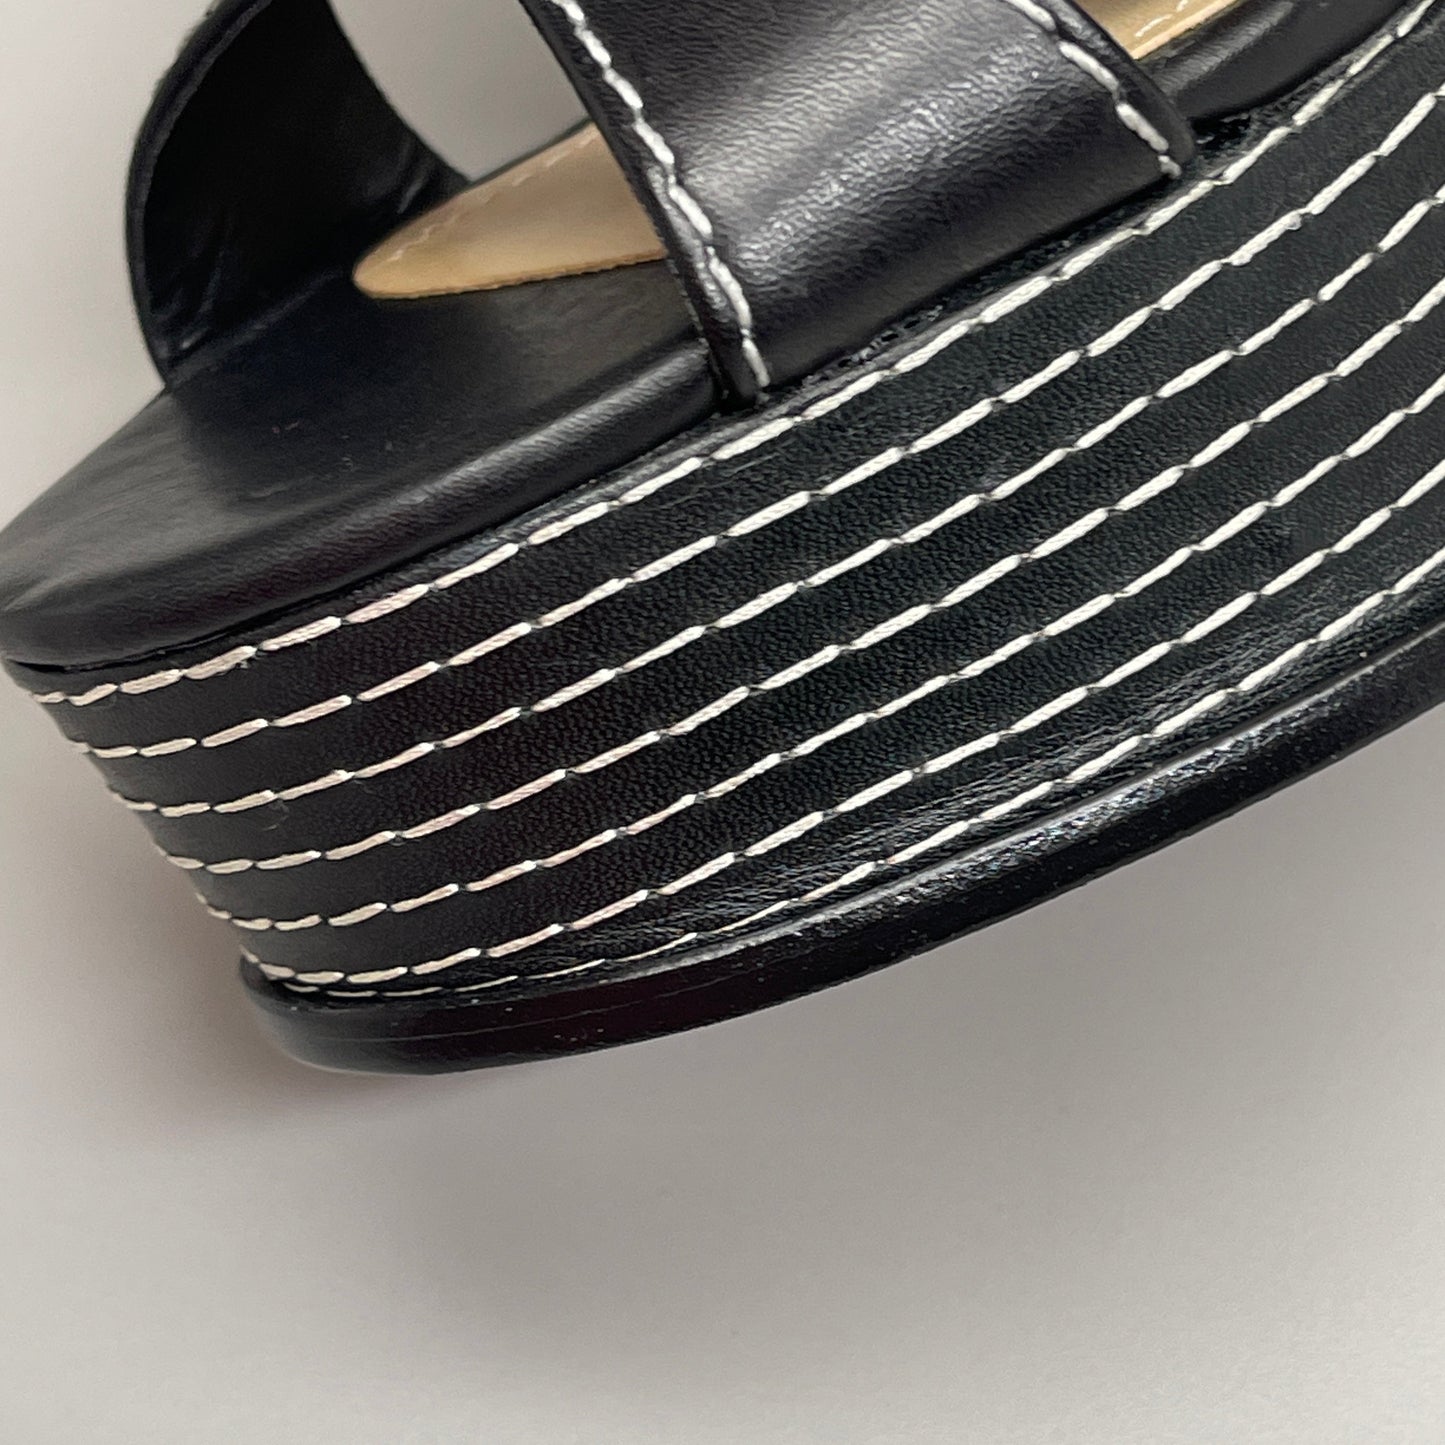 SCHUTZ Keefa Casual Women's Leather Sandal Black Platform 4" Heel Shoes Sz 10B (New)